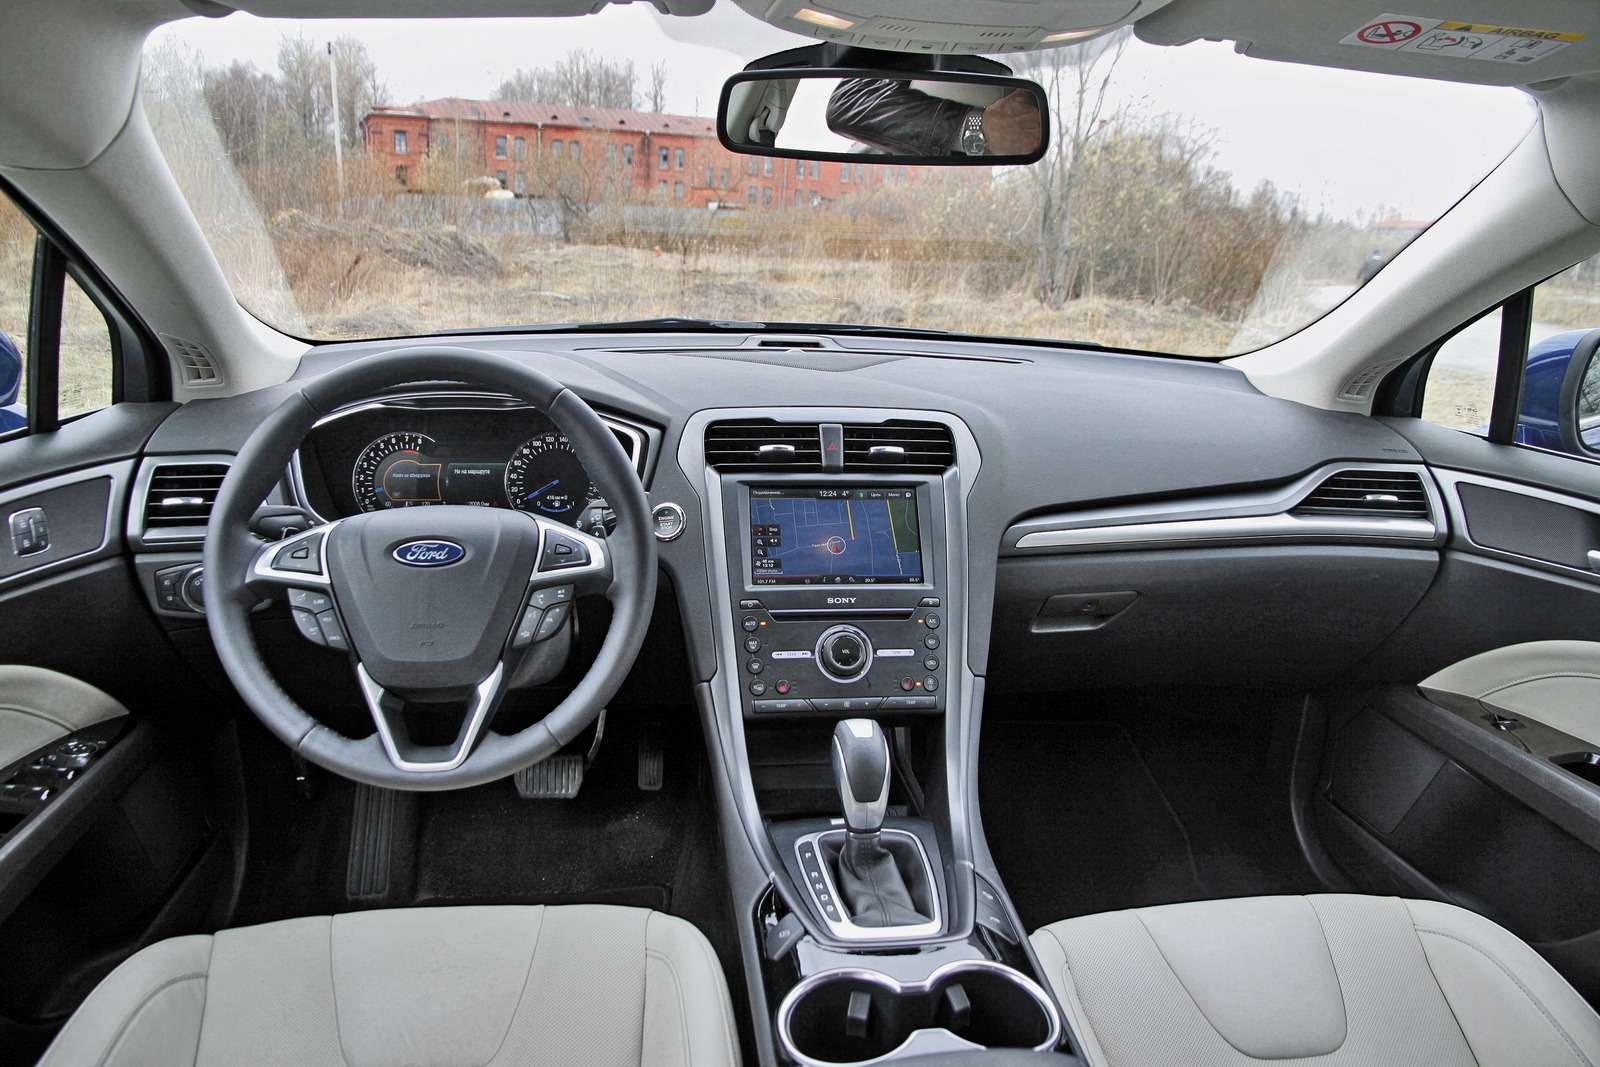 Ford Mondeo 2015 Interior